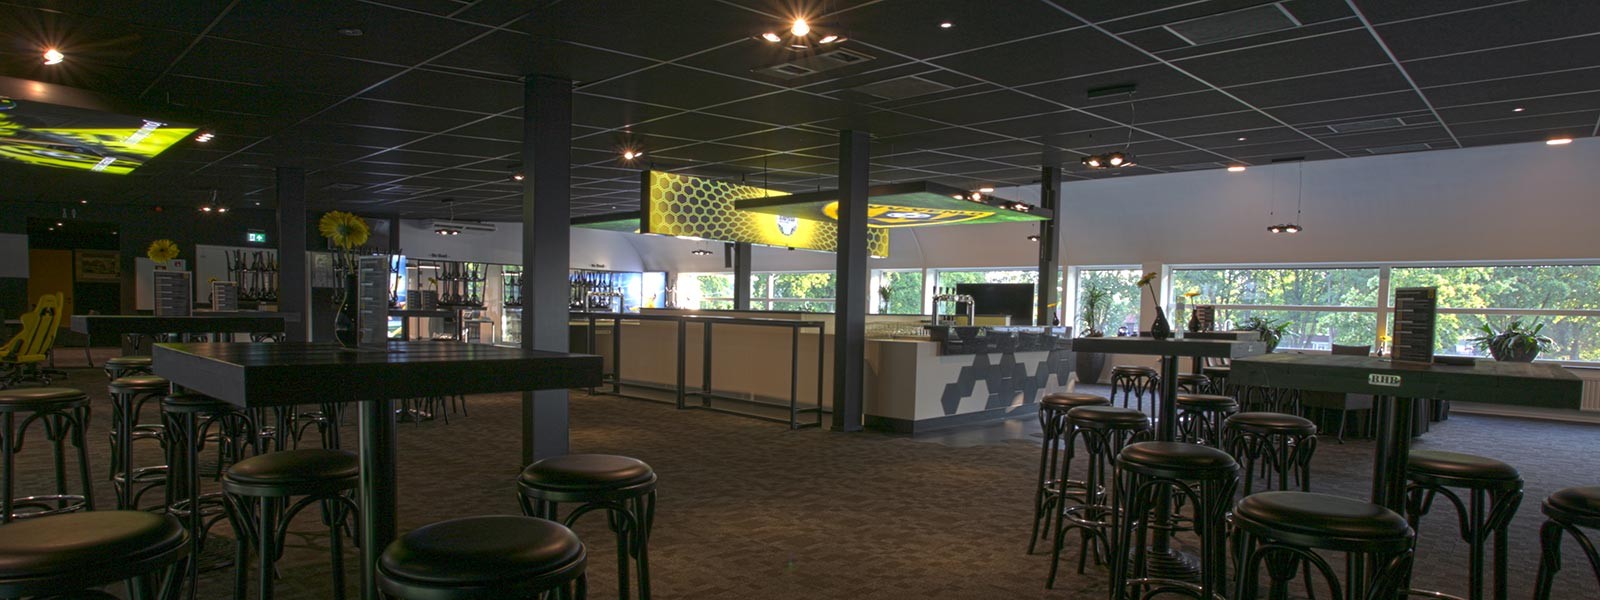 VVV-Venlo Business lounge, Venlo